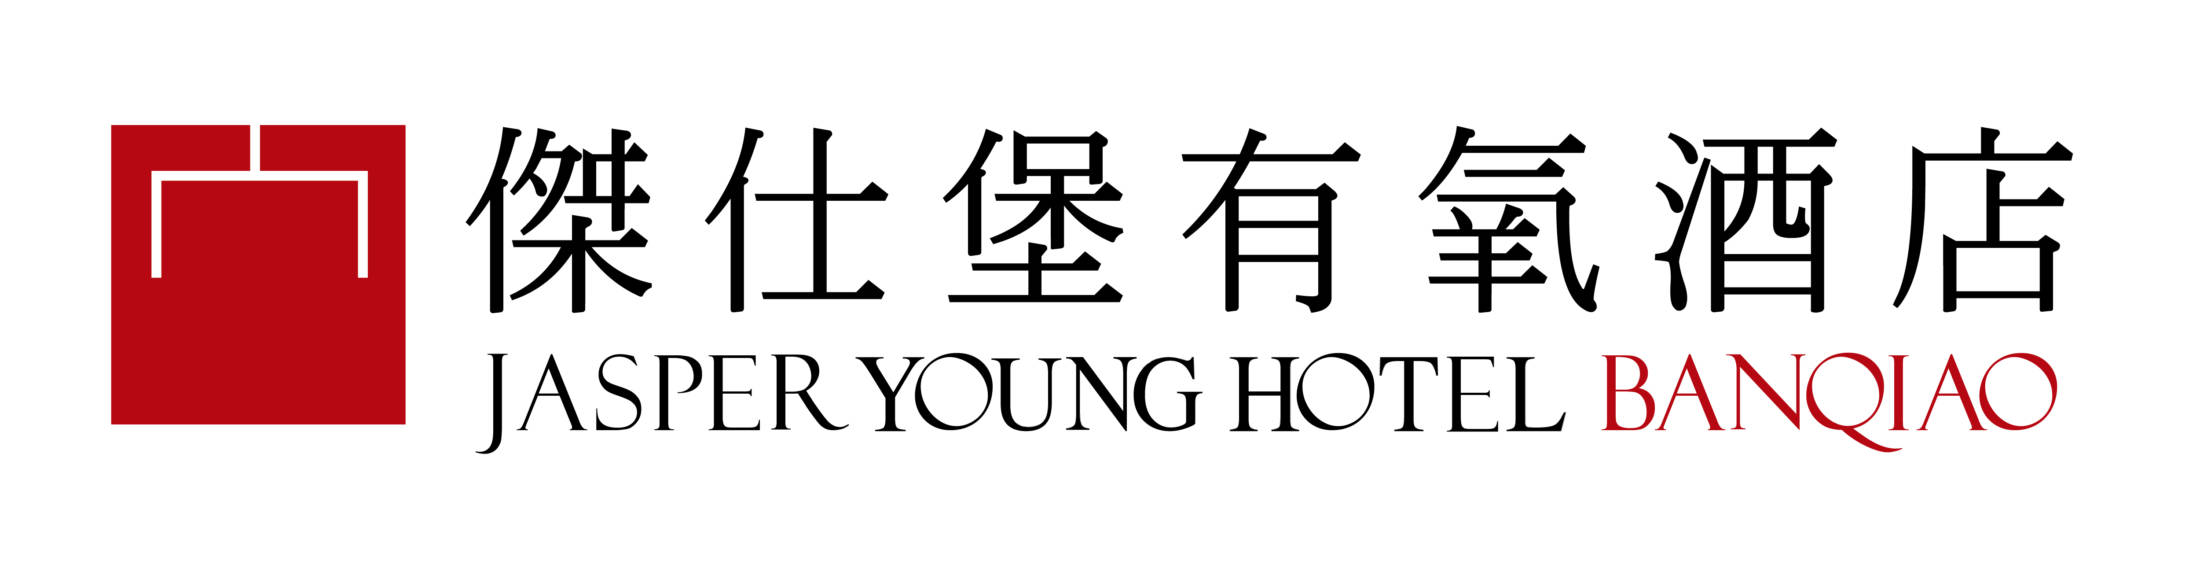 Jasper Young Hotel Banqiao